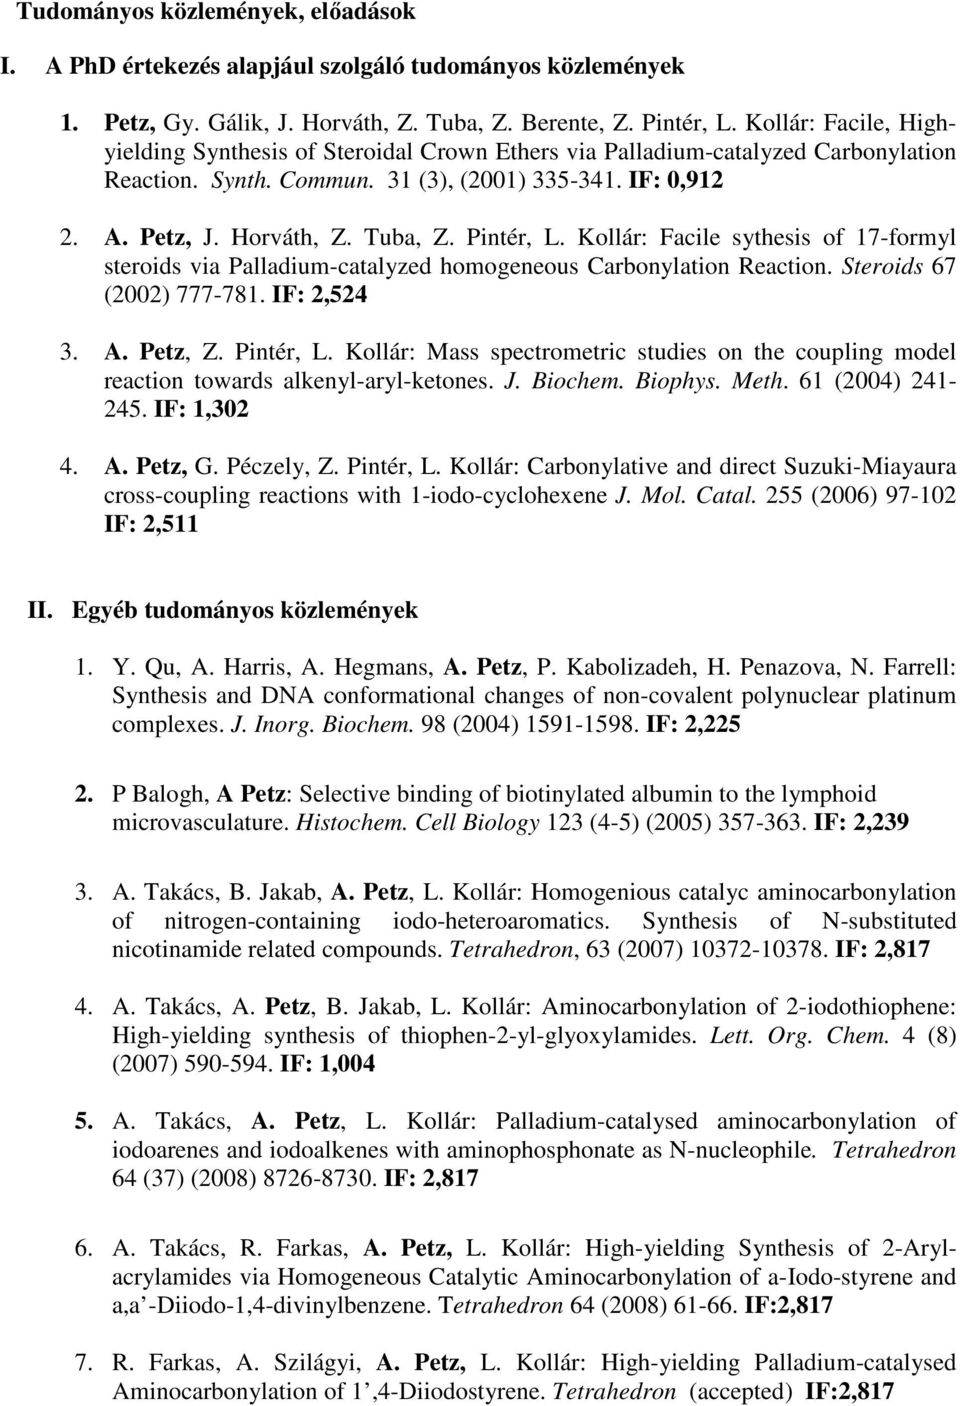 Pintér, L. Kollár: Facile sythesis of 17-formyl steroids via Palladium-catalyzed homogeneous arbonylation Reaction. Steroids 67 (2002) 777-781. F: 2,524 3. A. Petz, Z. Pintér, L.